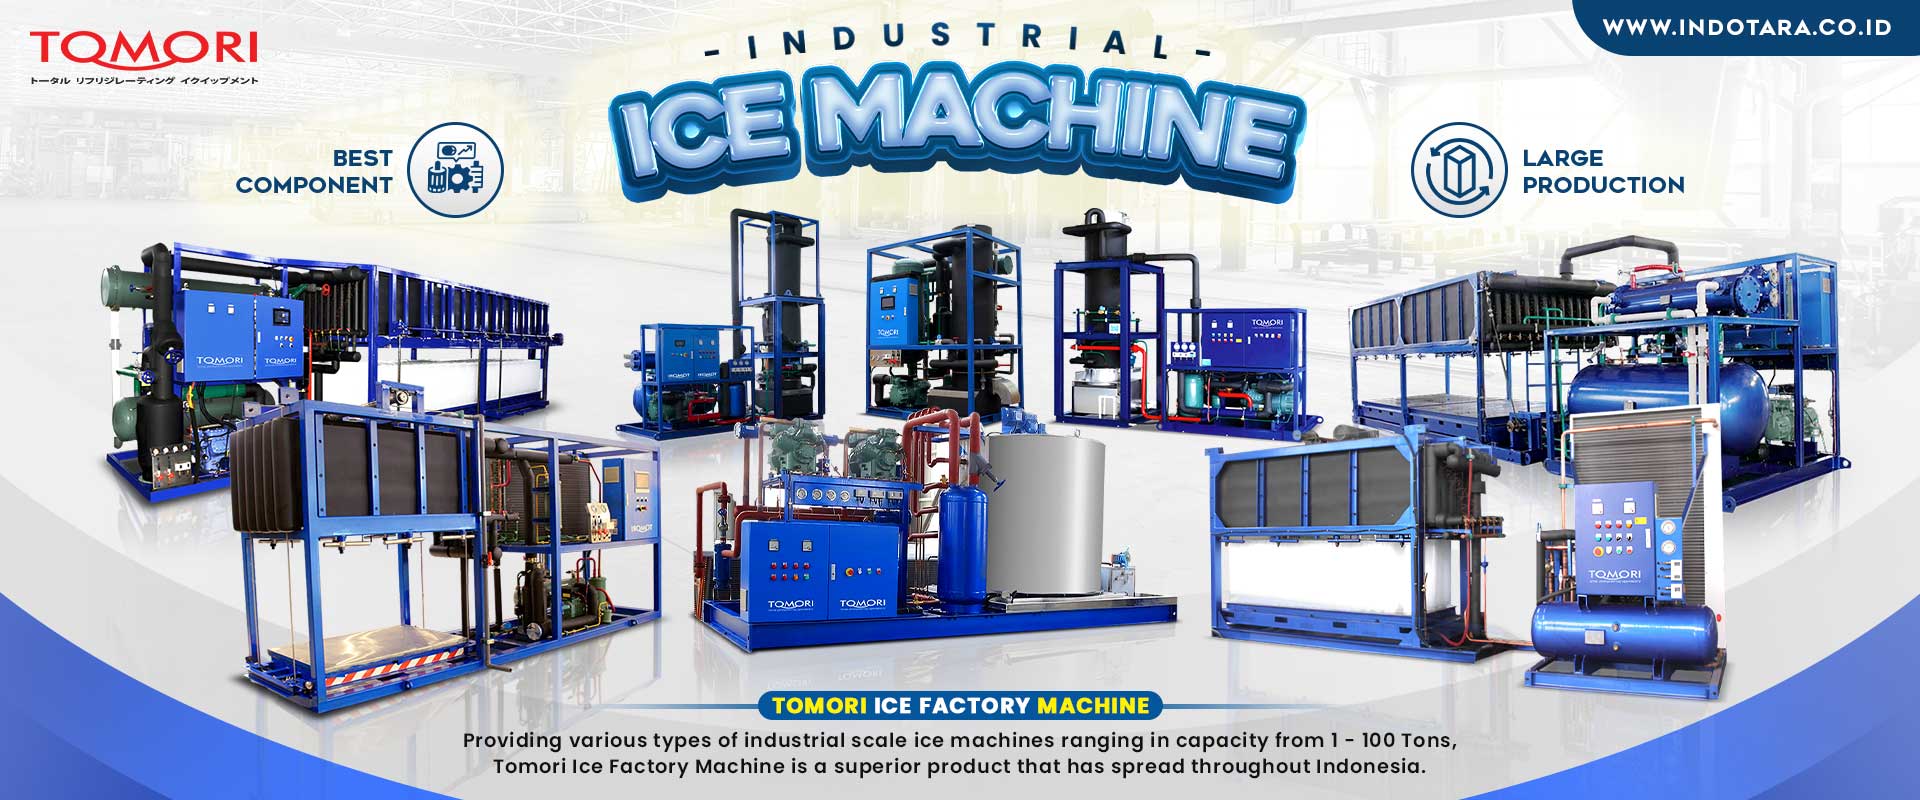 Tomori Industrial ice machine